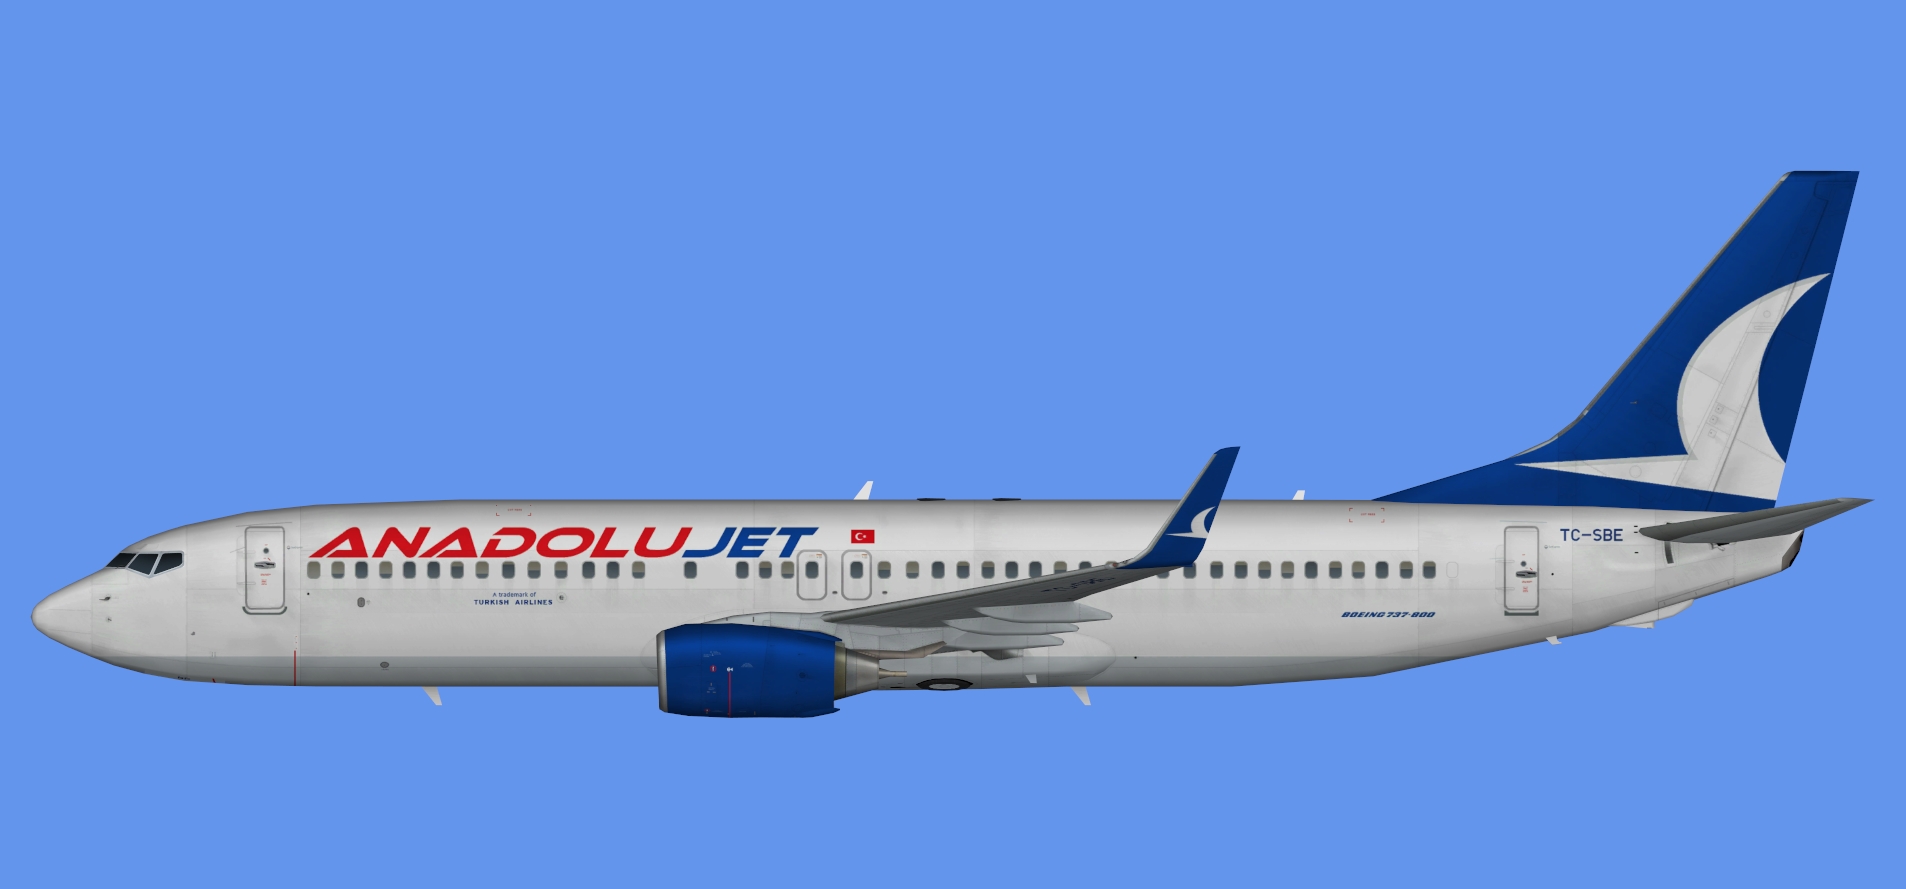 Anadolujet Boeing 737-800